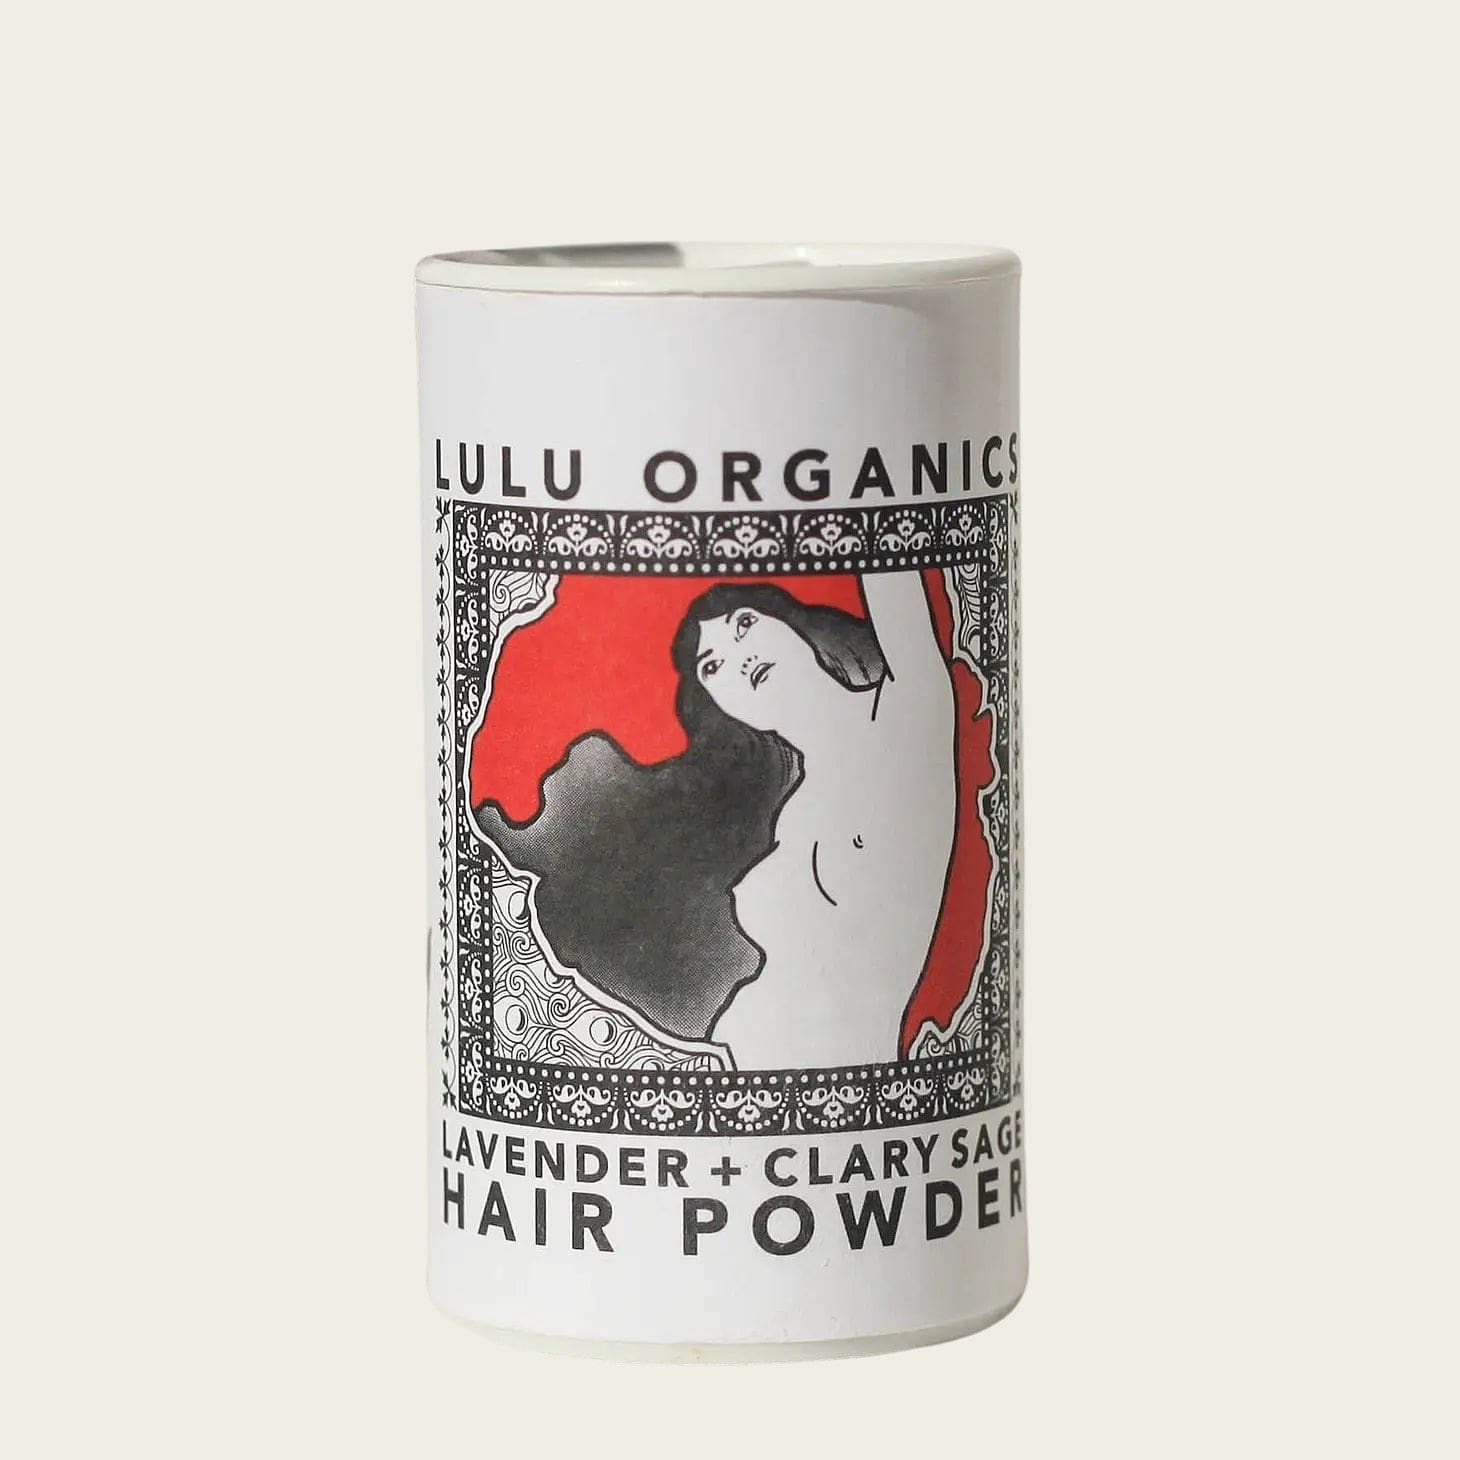 Lulu Organics dry shampoo Lavender & Clary Sage Hair Powder Shampoo sunja link - canada